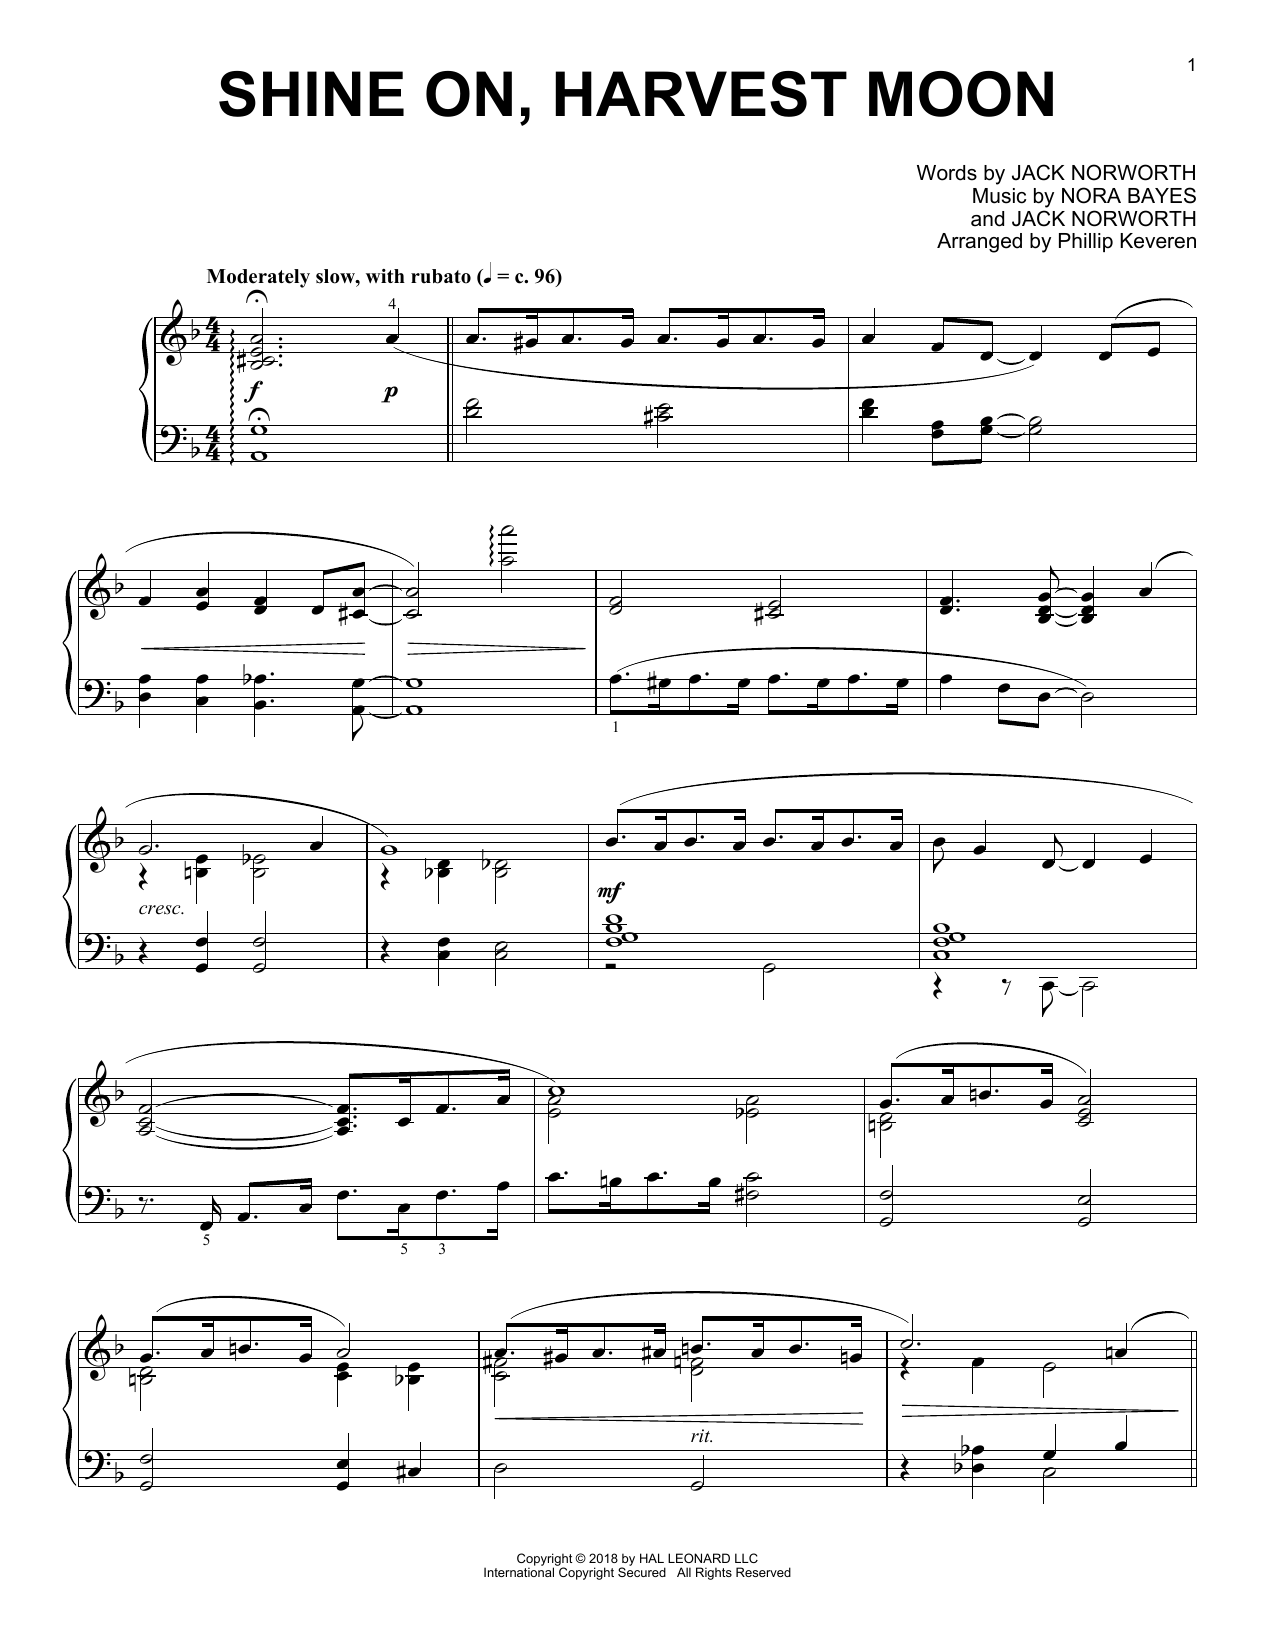 Jack Norworth Shine On, Harvest Moon [Jazz version] (arr. Phillip Keveren) Sheet Music Notes & Chords for Piano - Download or Print PDF